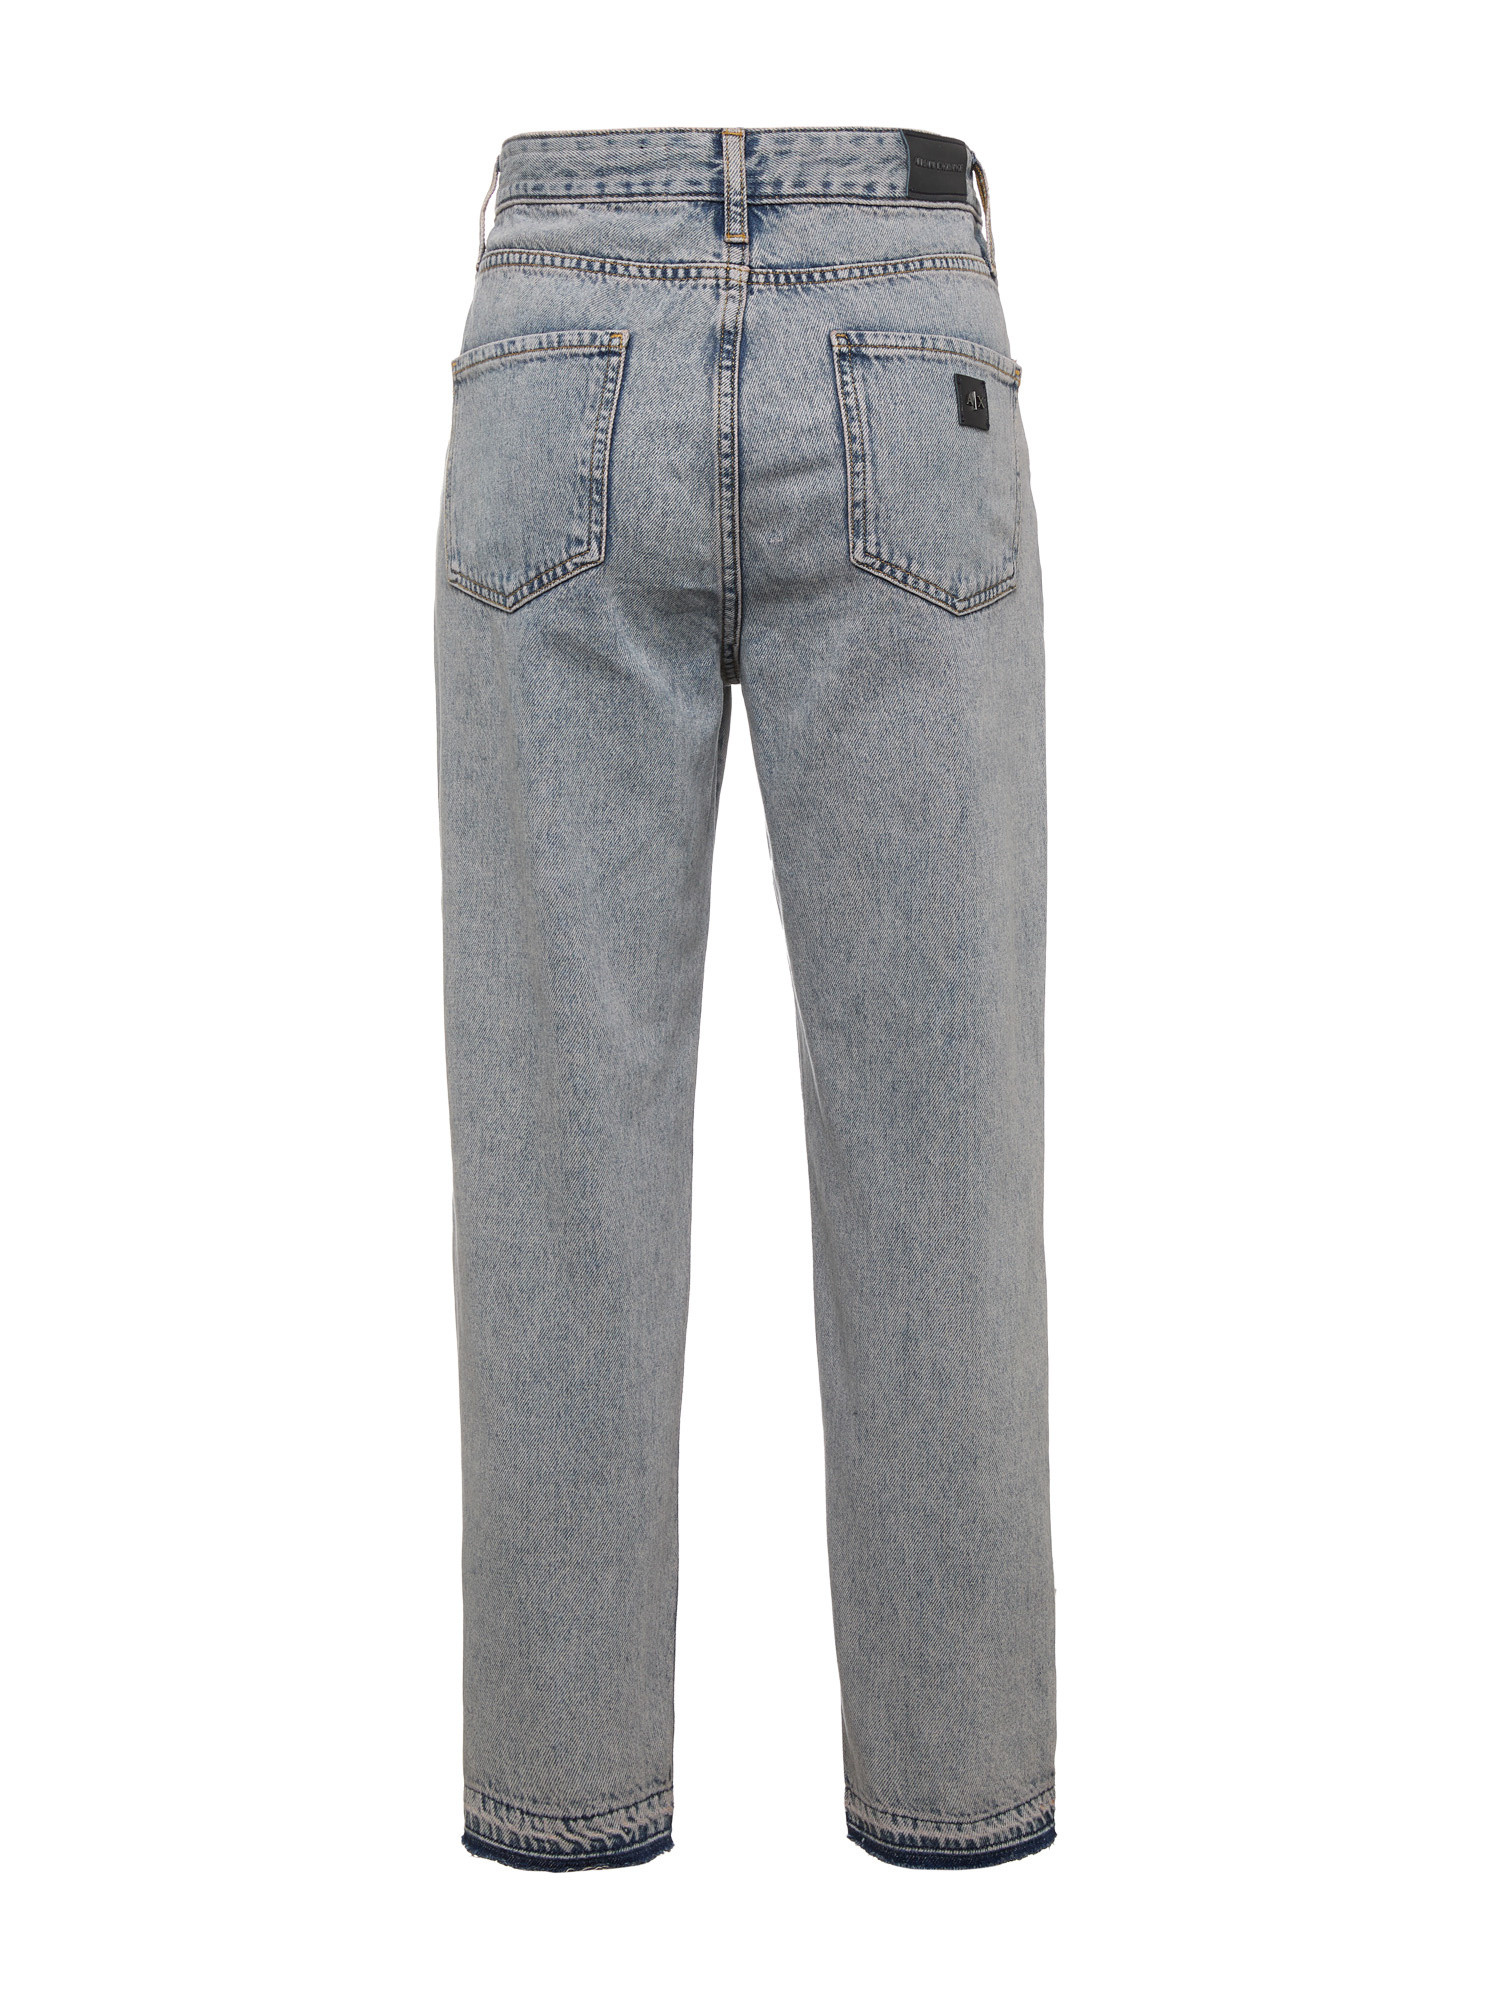 Armani Exchange - Jeans boyfriend cropped di cotone organico, Denim, large image number 1